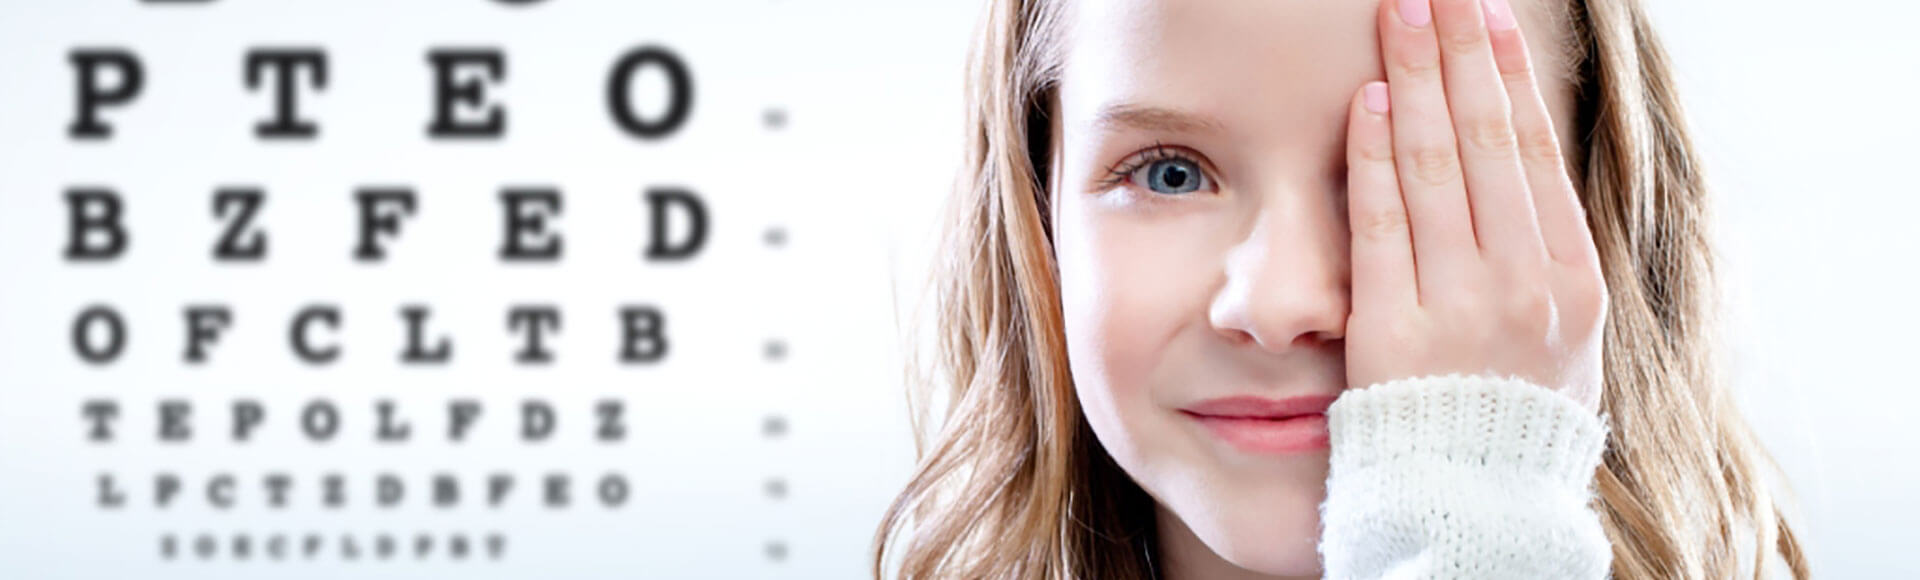 child-reviewing-eyesight